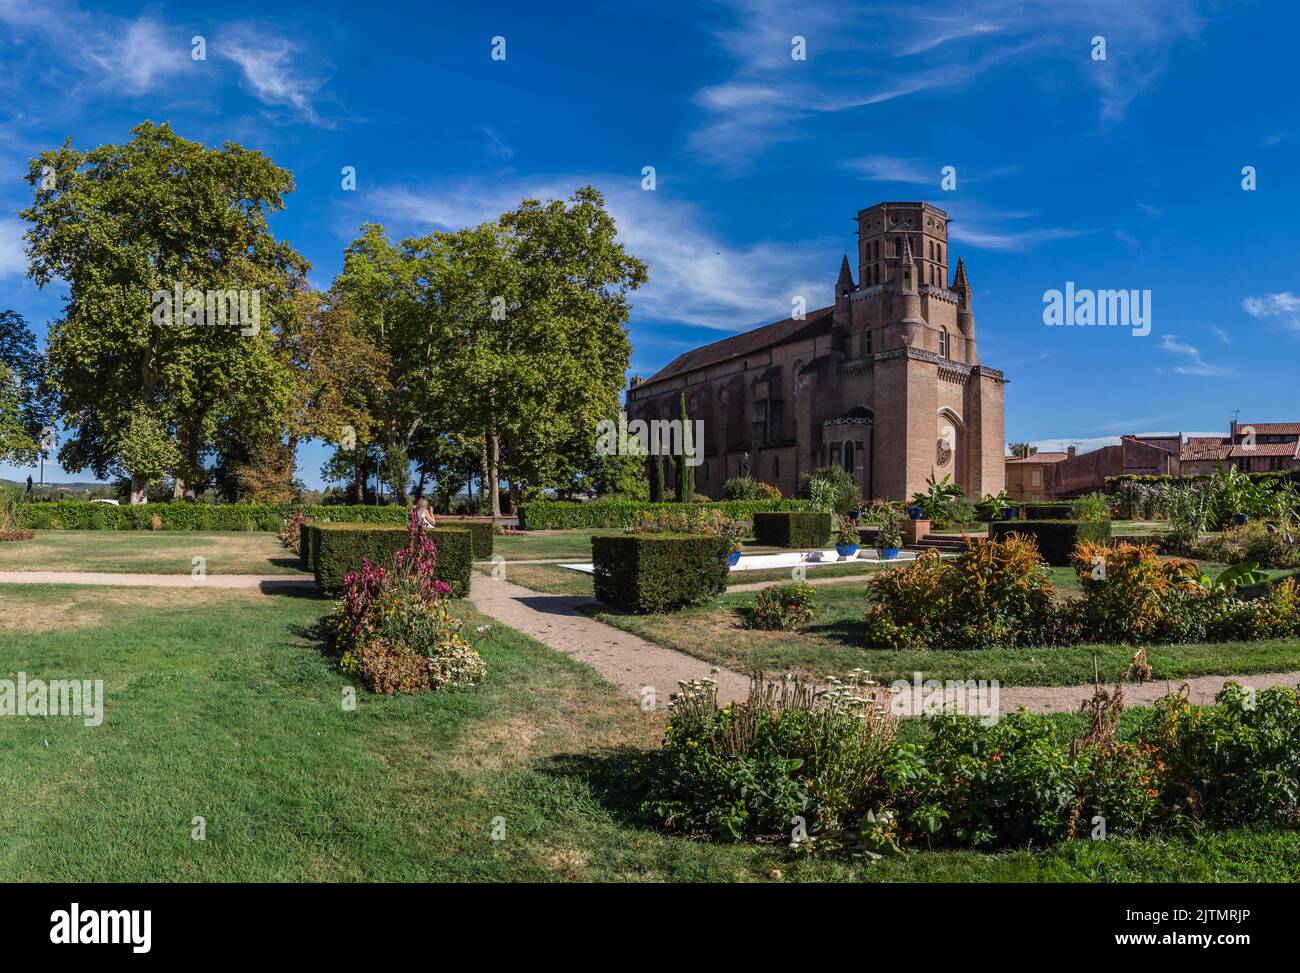 Vista panoramica de la cathédrale Saint Alain depuis le jardin Foto Stock